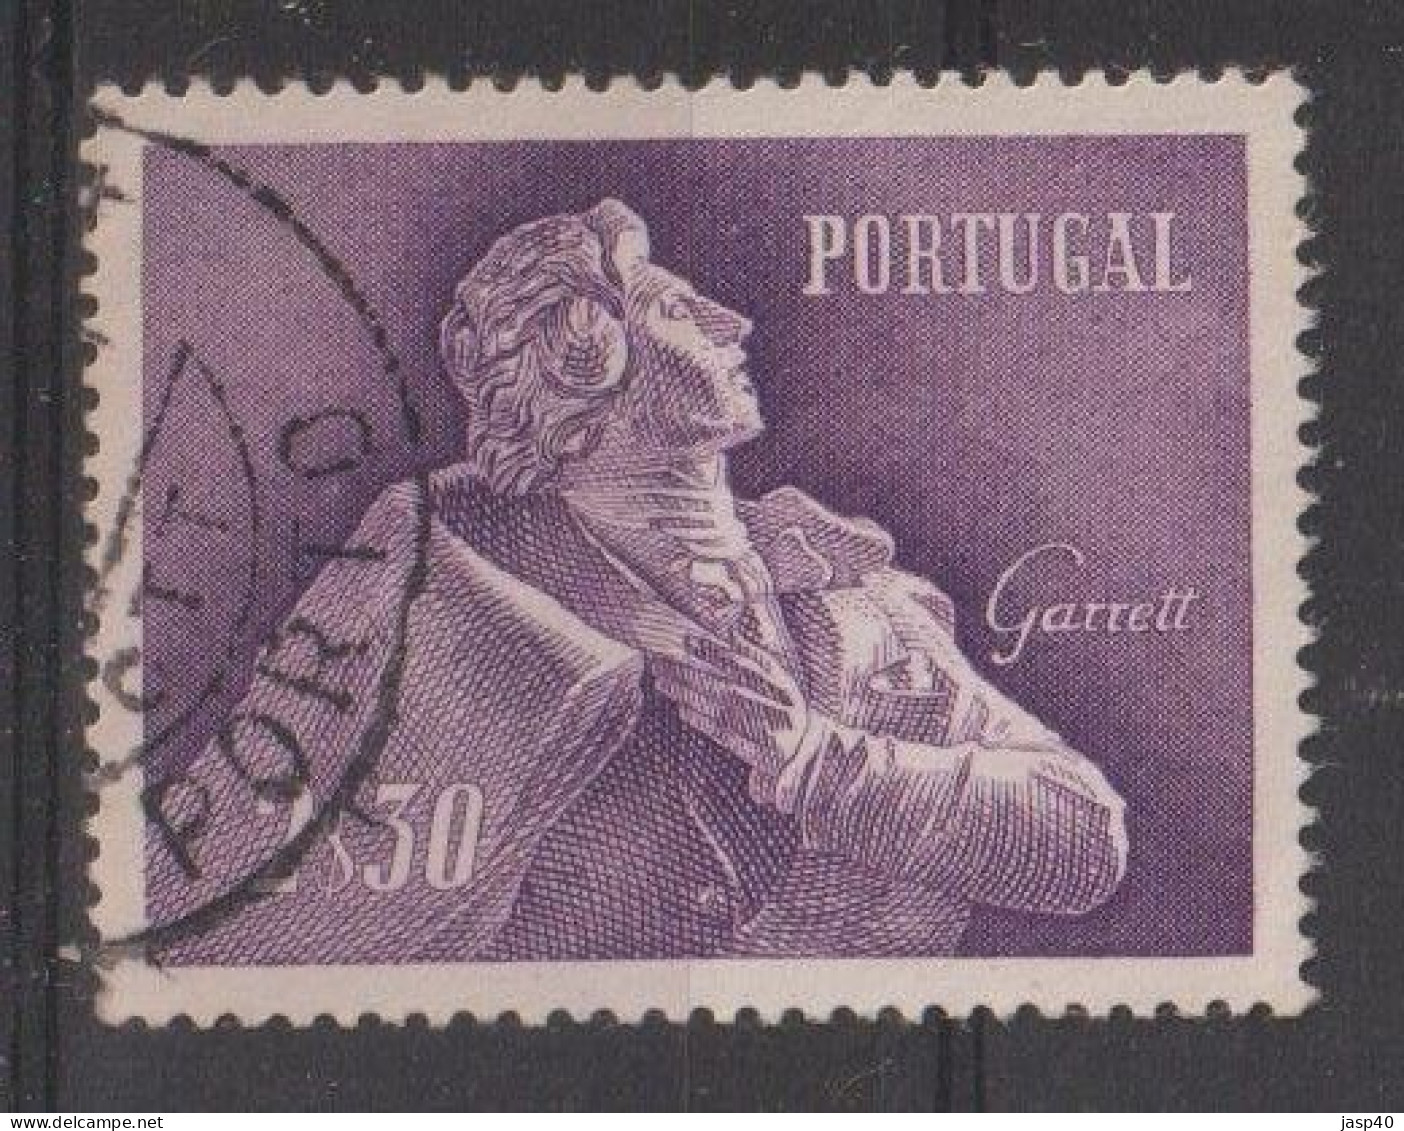 PORTUGAL 828 - POSTMARKS OF PORTUGAL - PORTO - Gebruikt